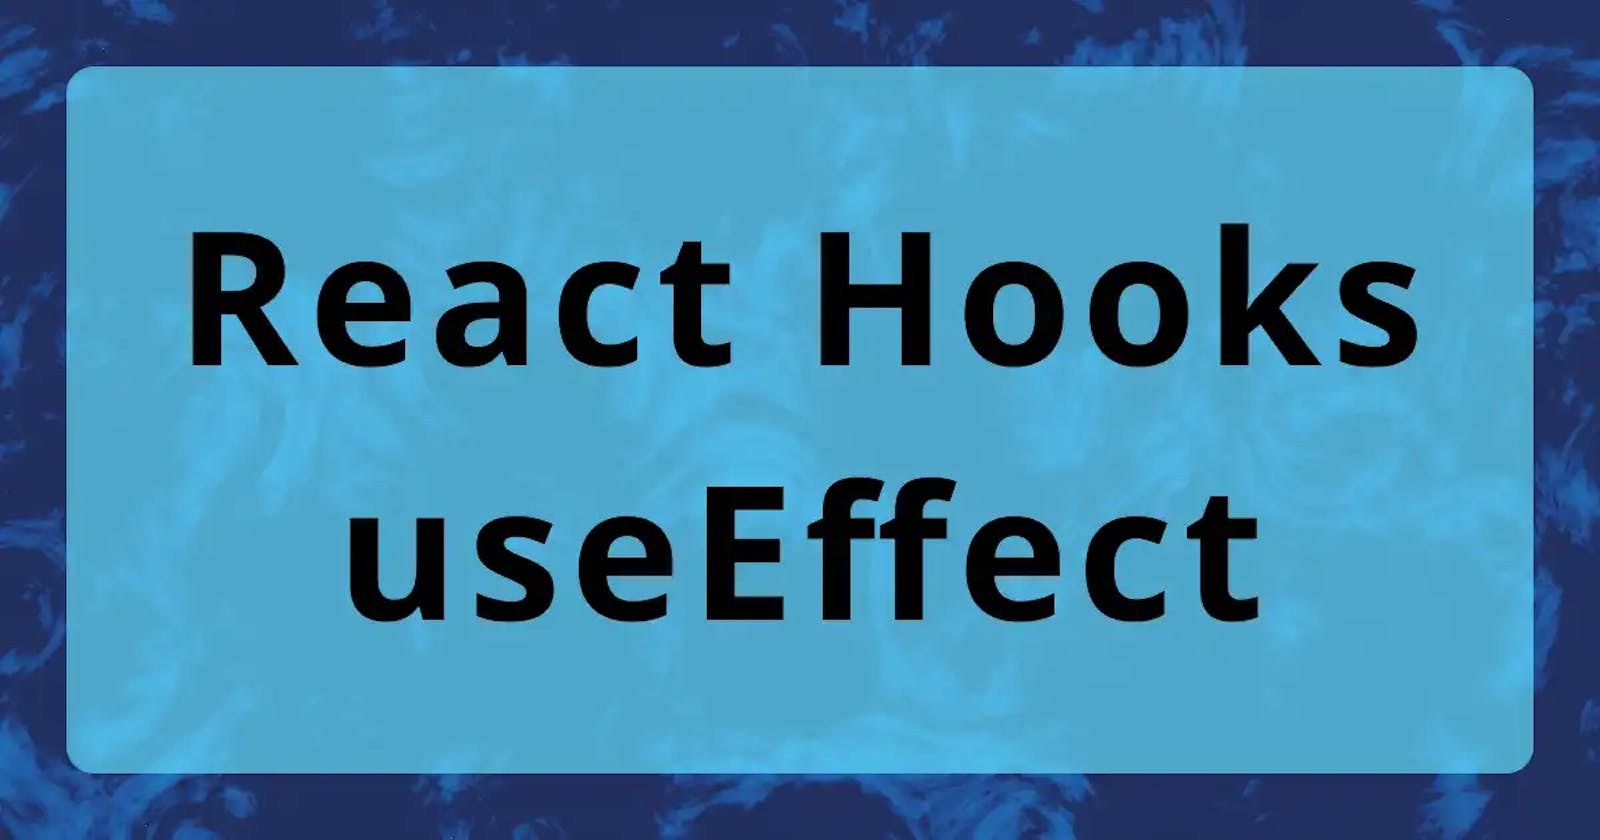 React Hooks - useEffect